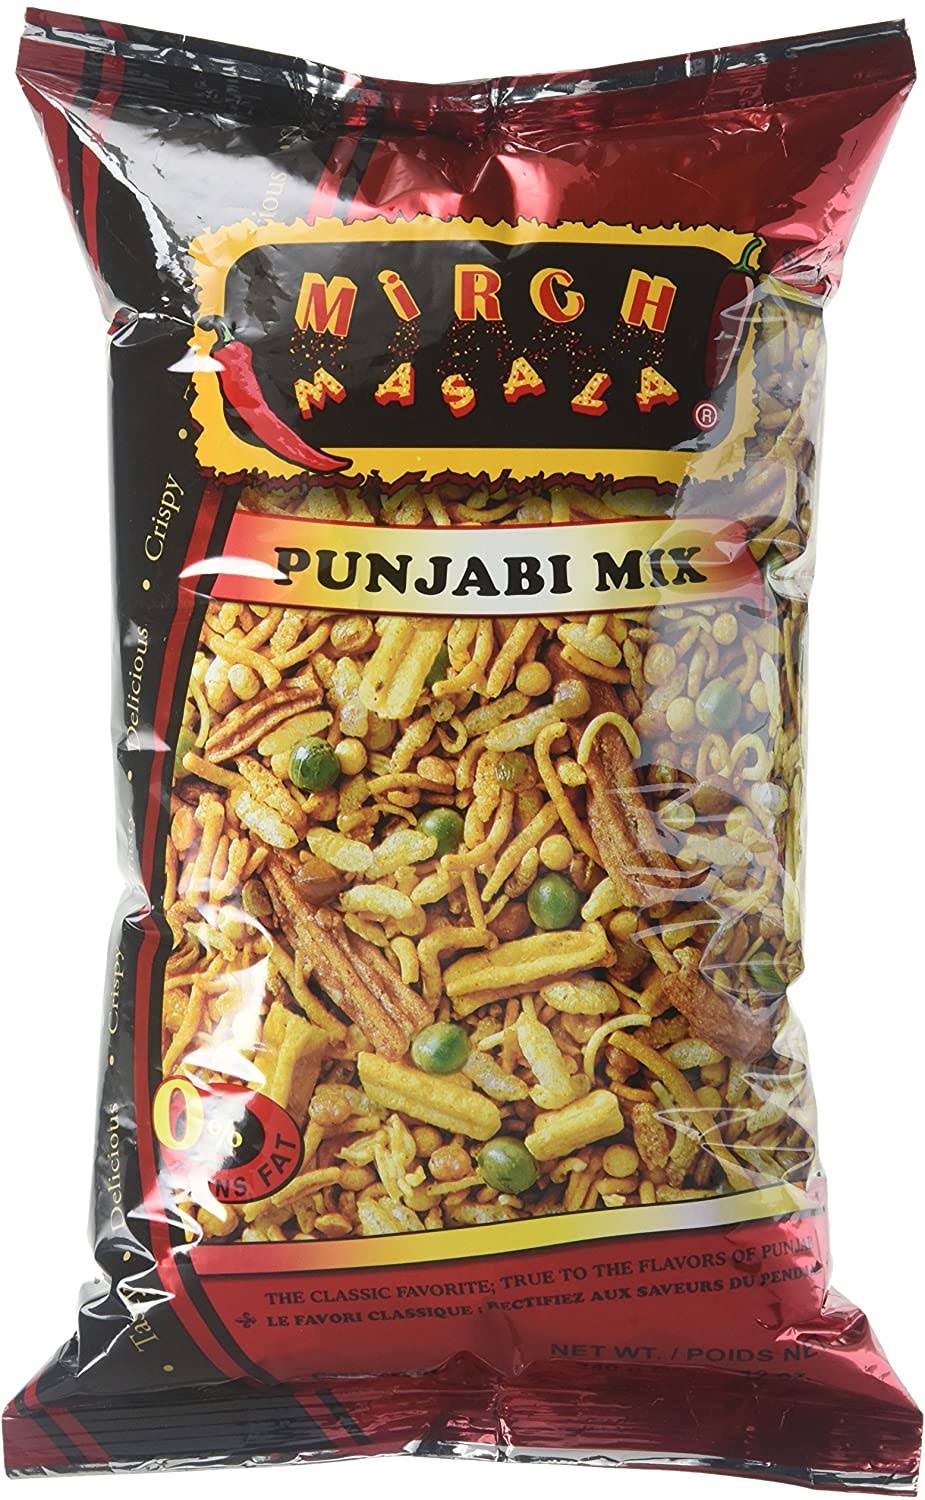 Mirch Masala Punjabi Mix - 12oz